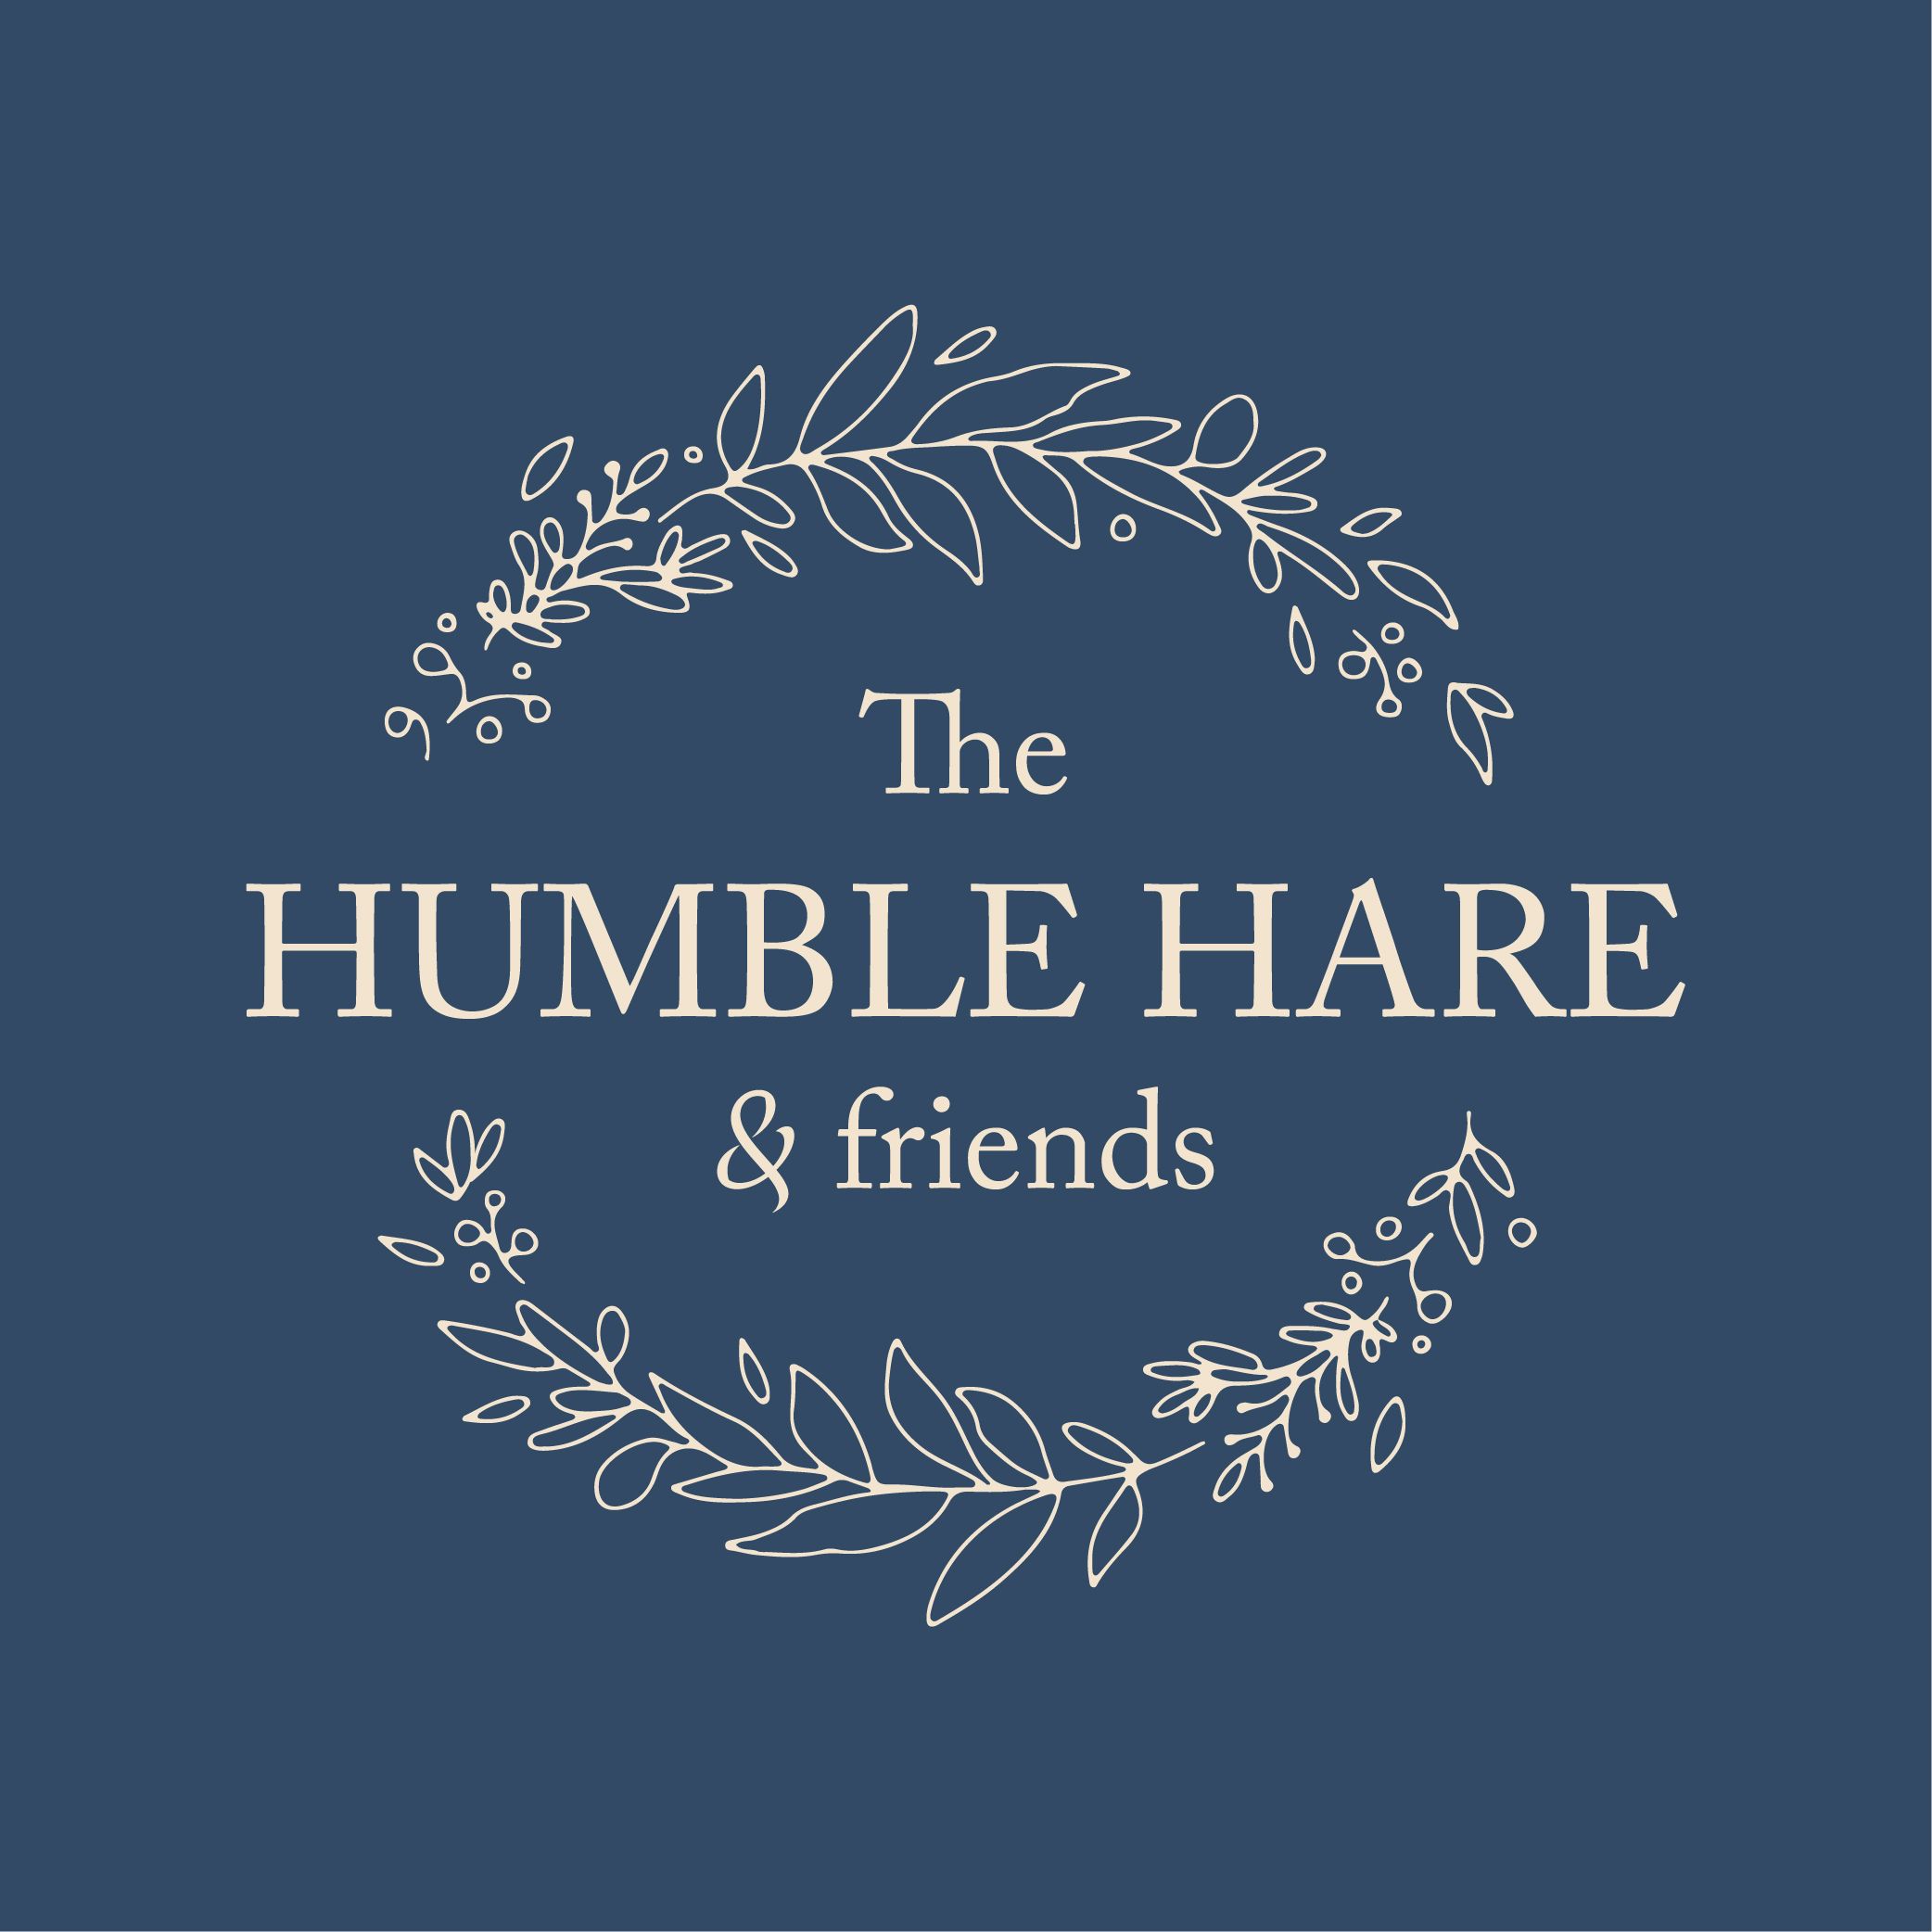 The Humble Hare ltd